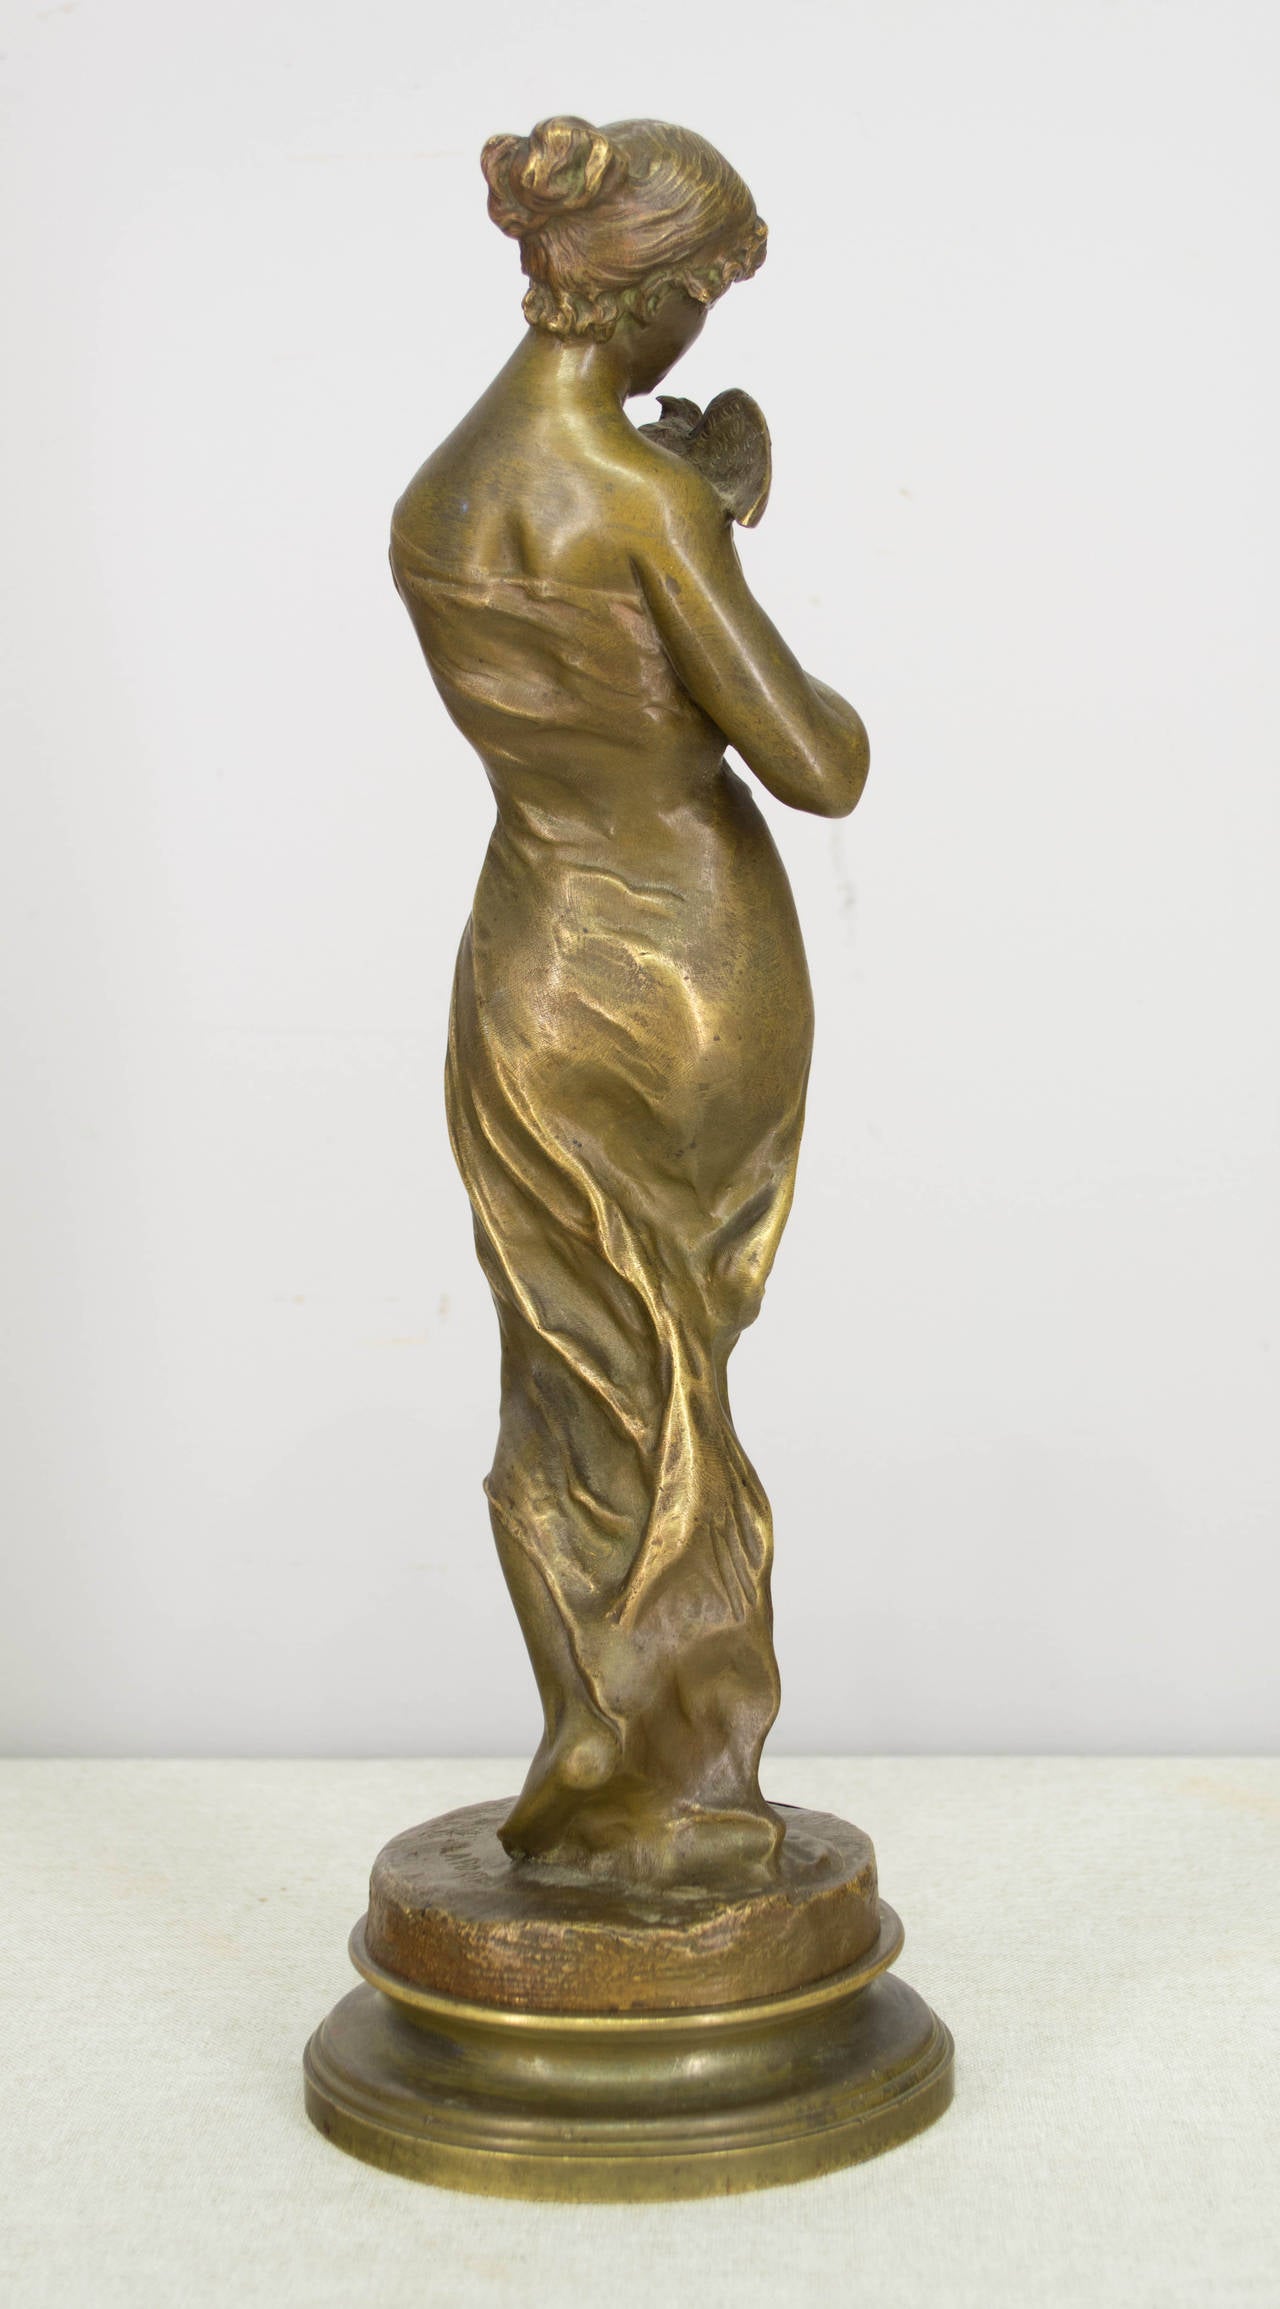 19th century French bronze by Emile Laporte (1858-1907) entitled 